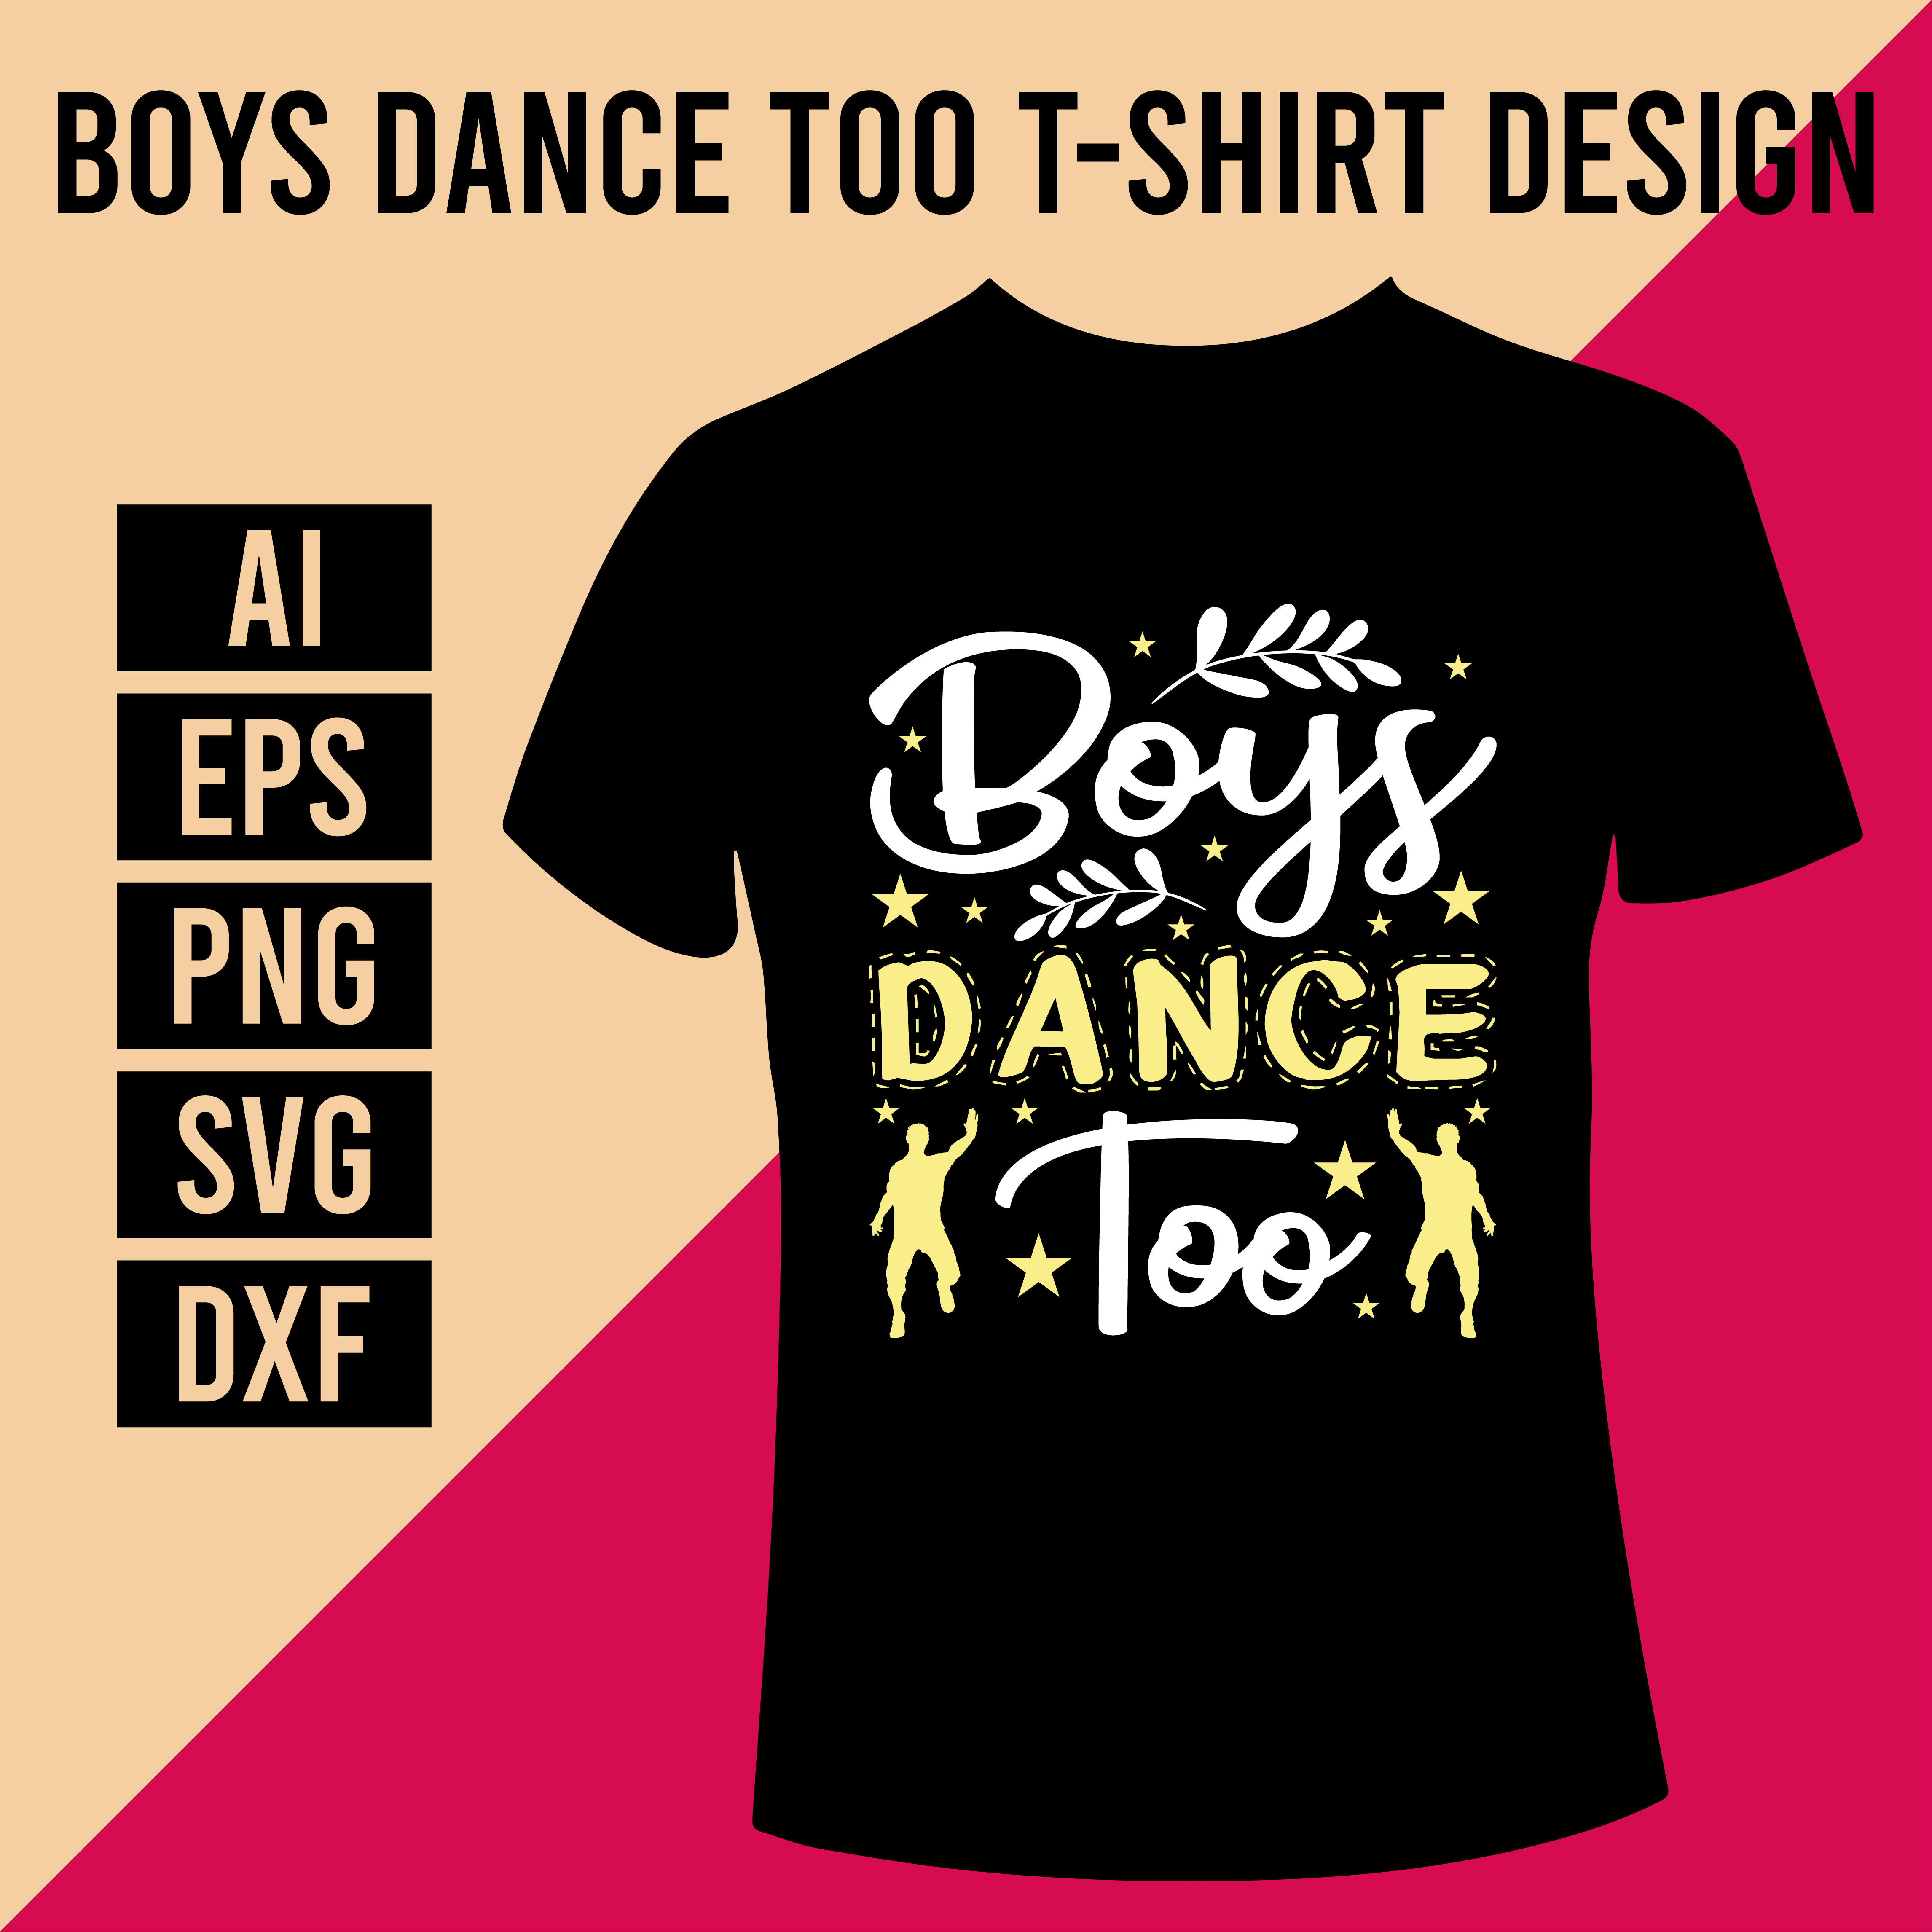 Boys Dance Too T-Shirt Design cover image.